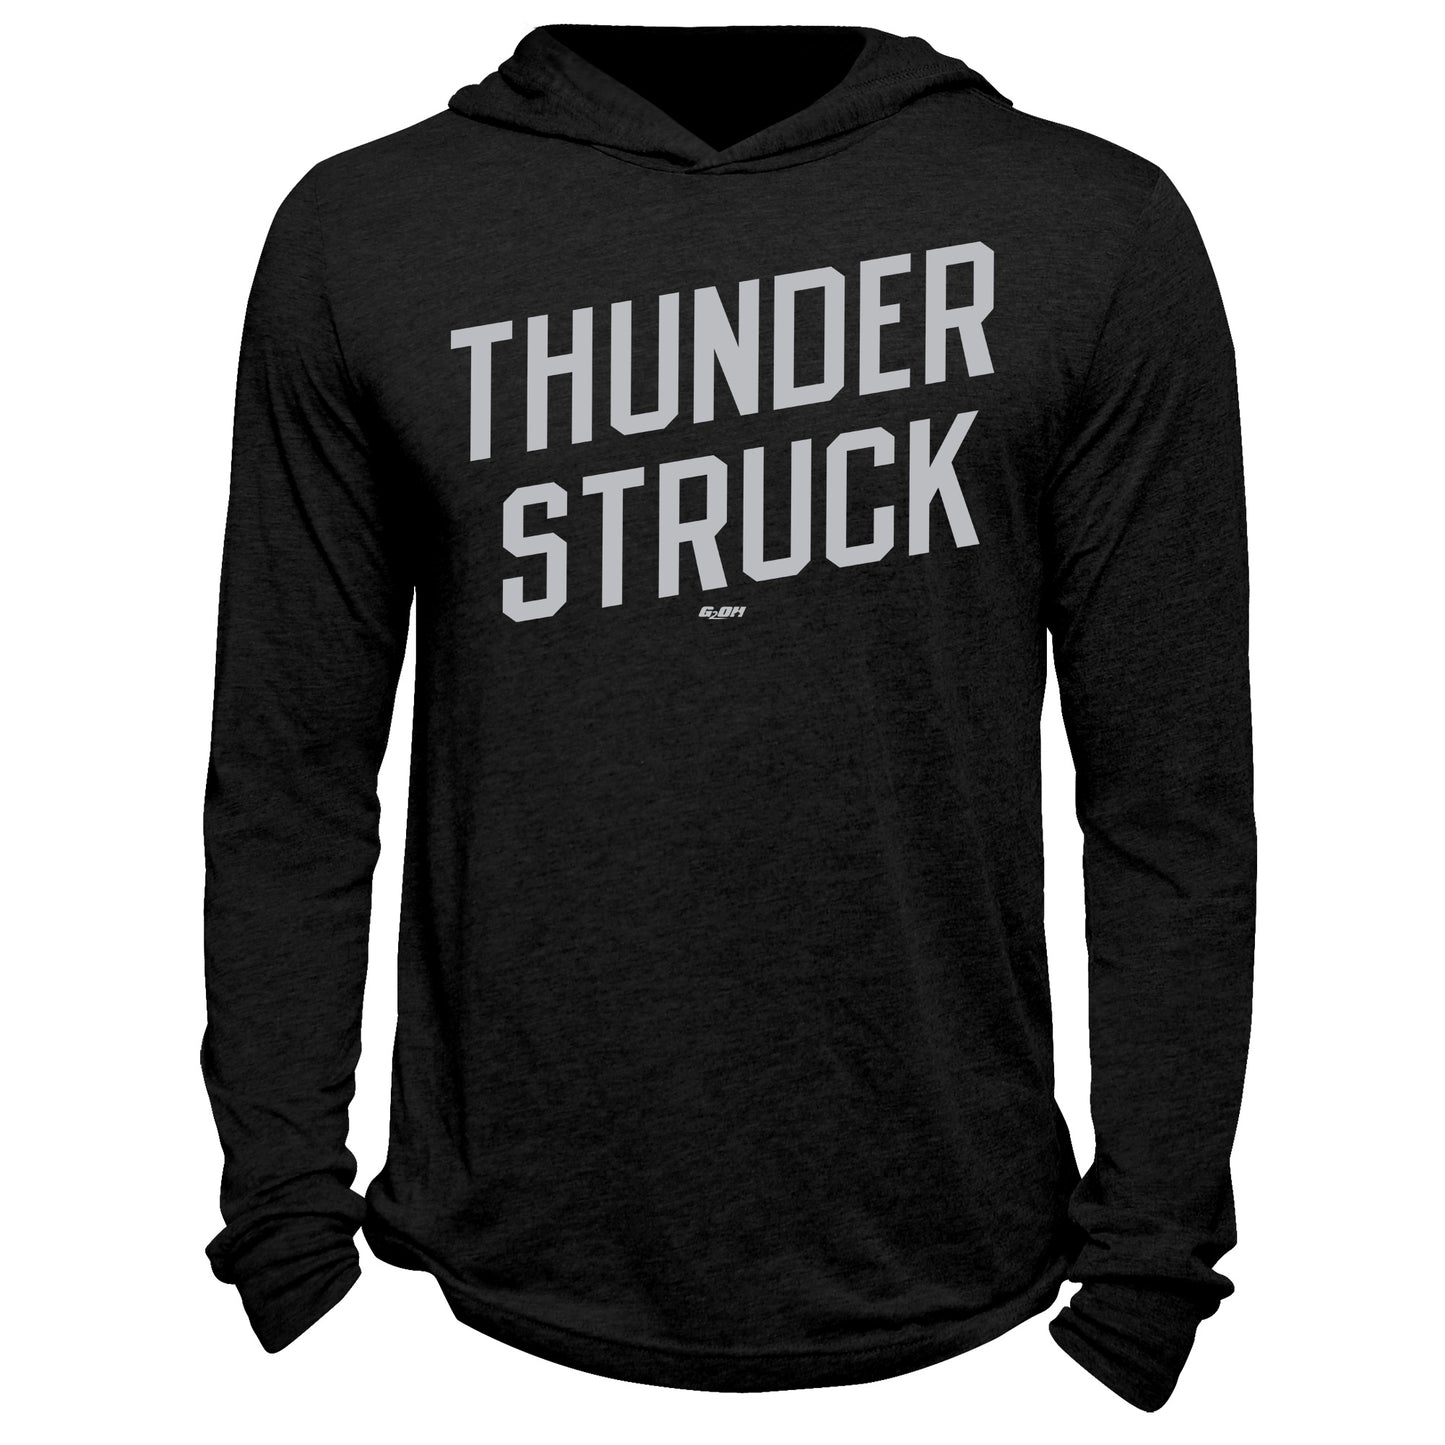 Thunder Struck Hoodie